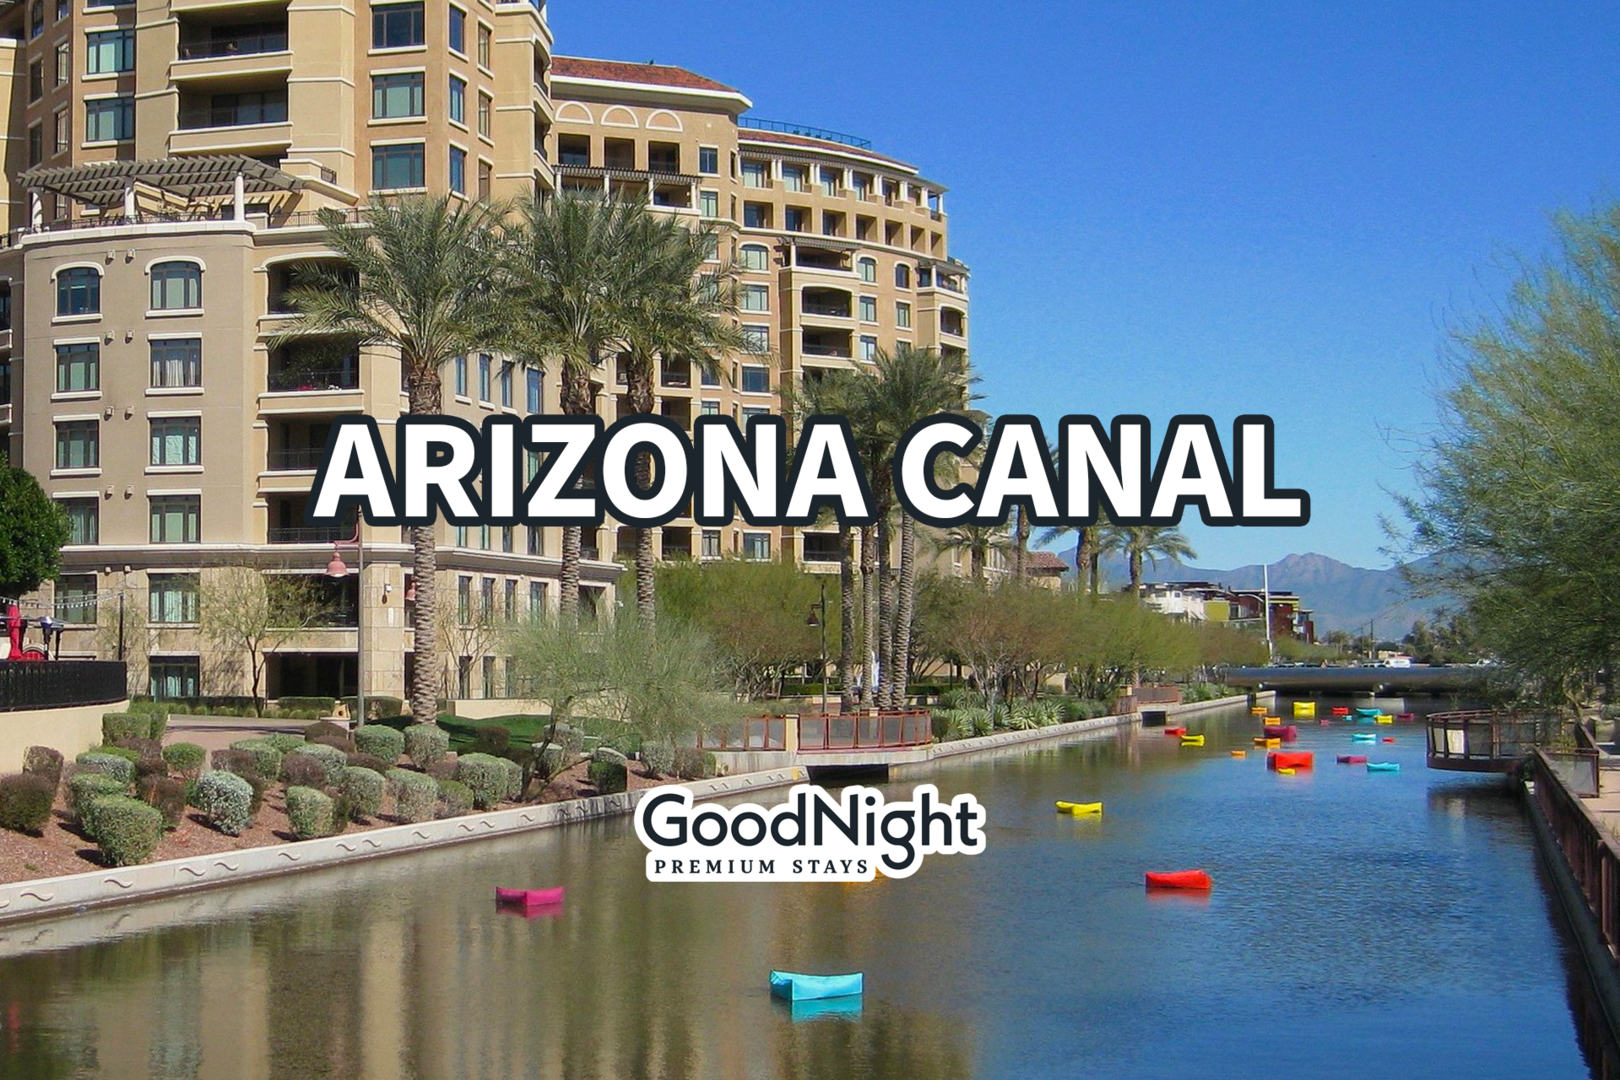 Arizona Canal: 3 mins